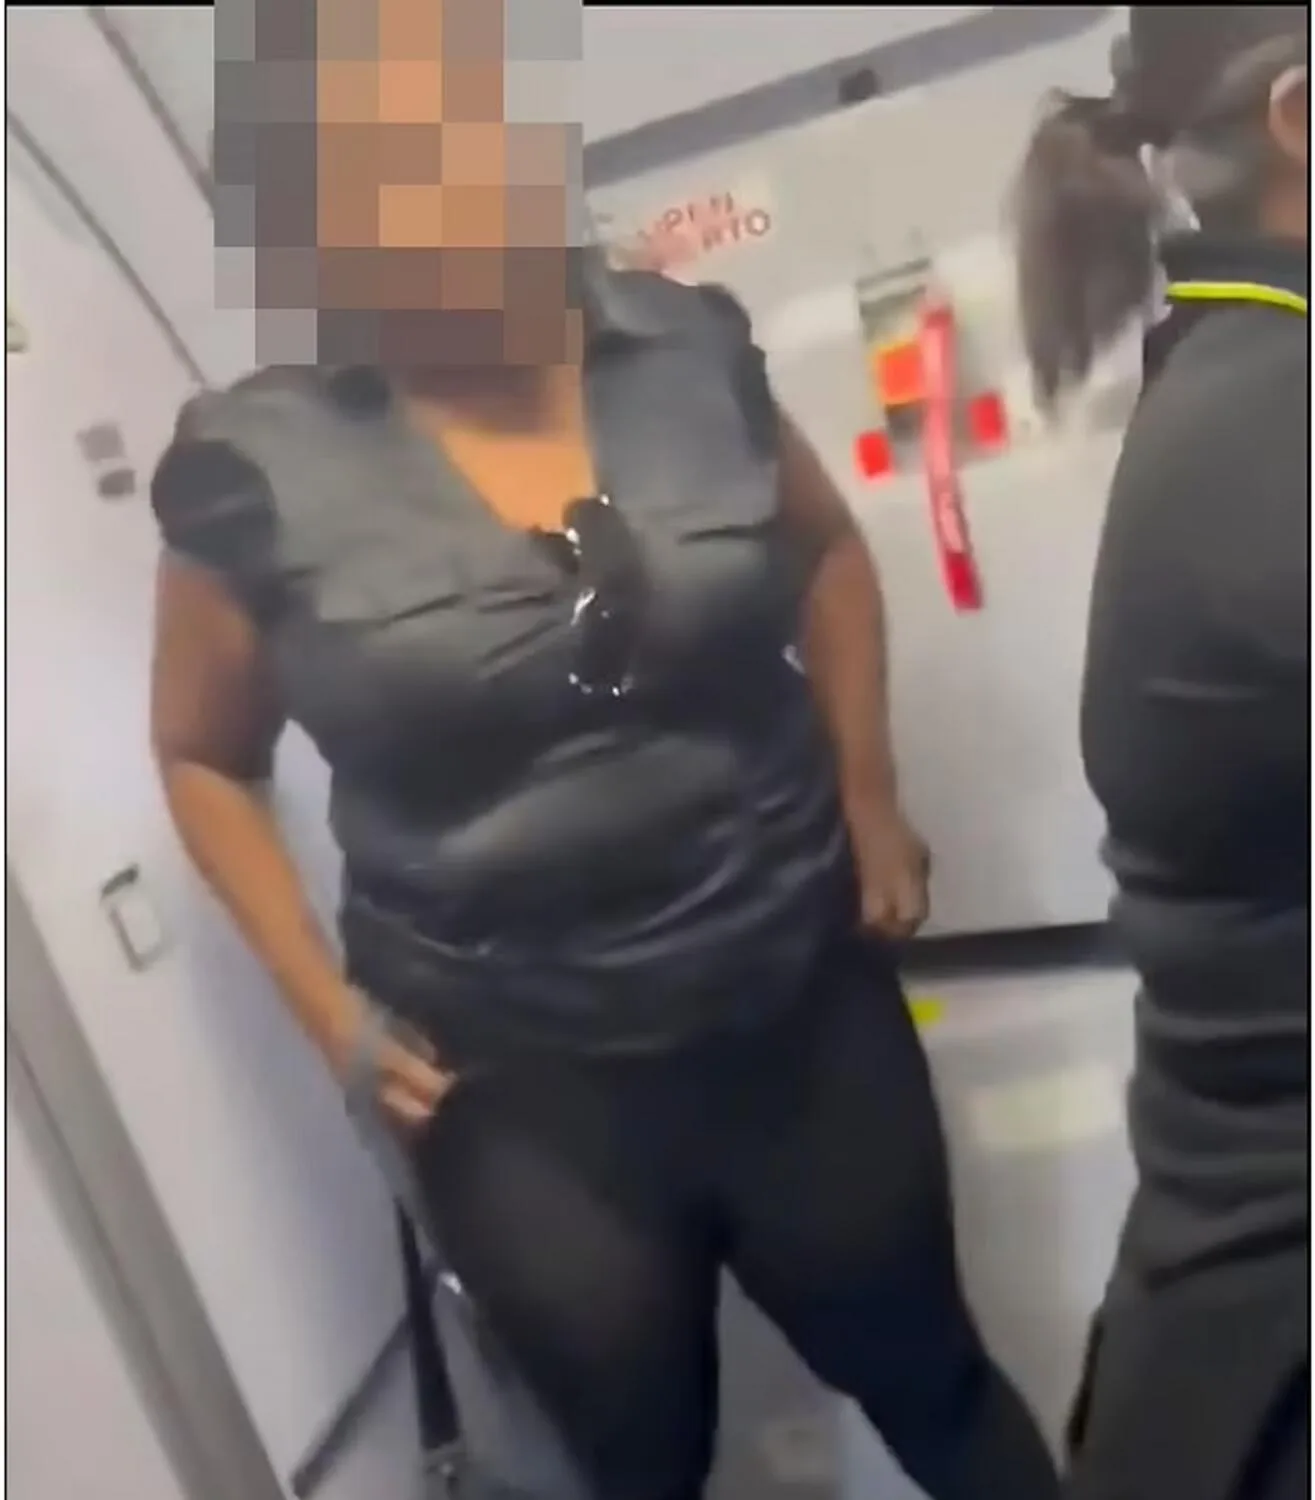 Woman pees on floor of airplane